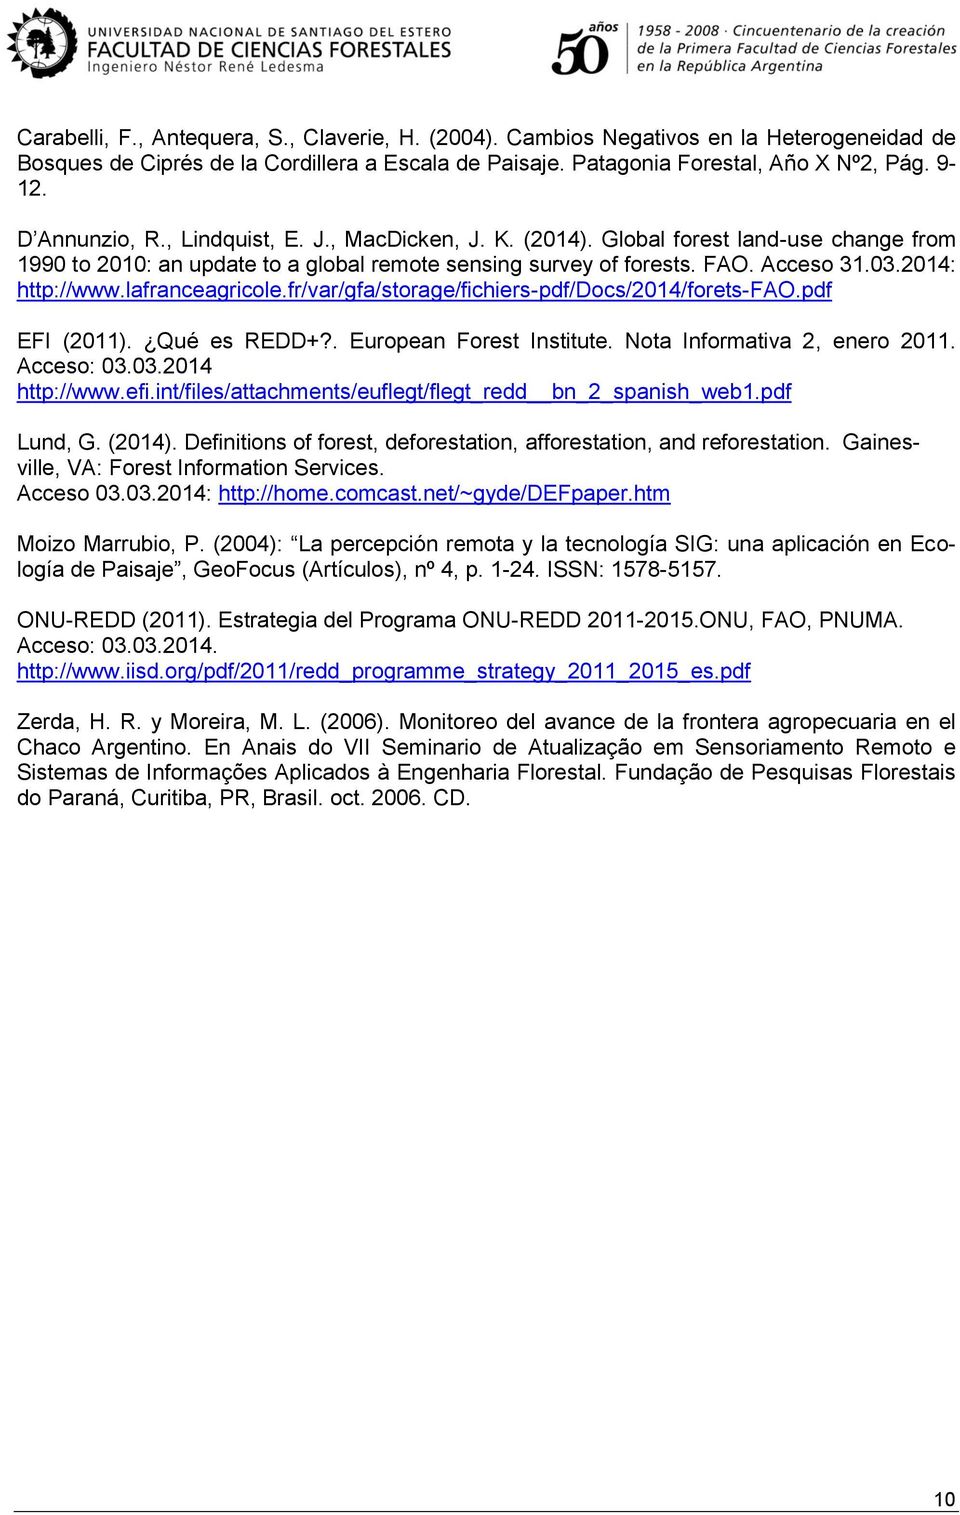 lafranceagricole.fr/var/gfa/storage/fichiers-pdf/docs/2014/forets-fao.pdf EFI (2011). Qué es REDD+?. European Forest Institute. Nota Informativa 2, enero 2011. Acceso: 03.03.2014 http://www.efi.